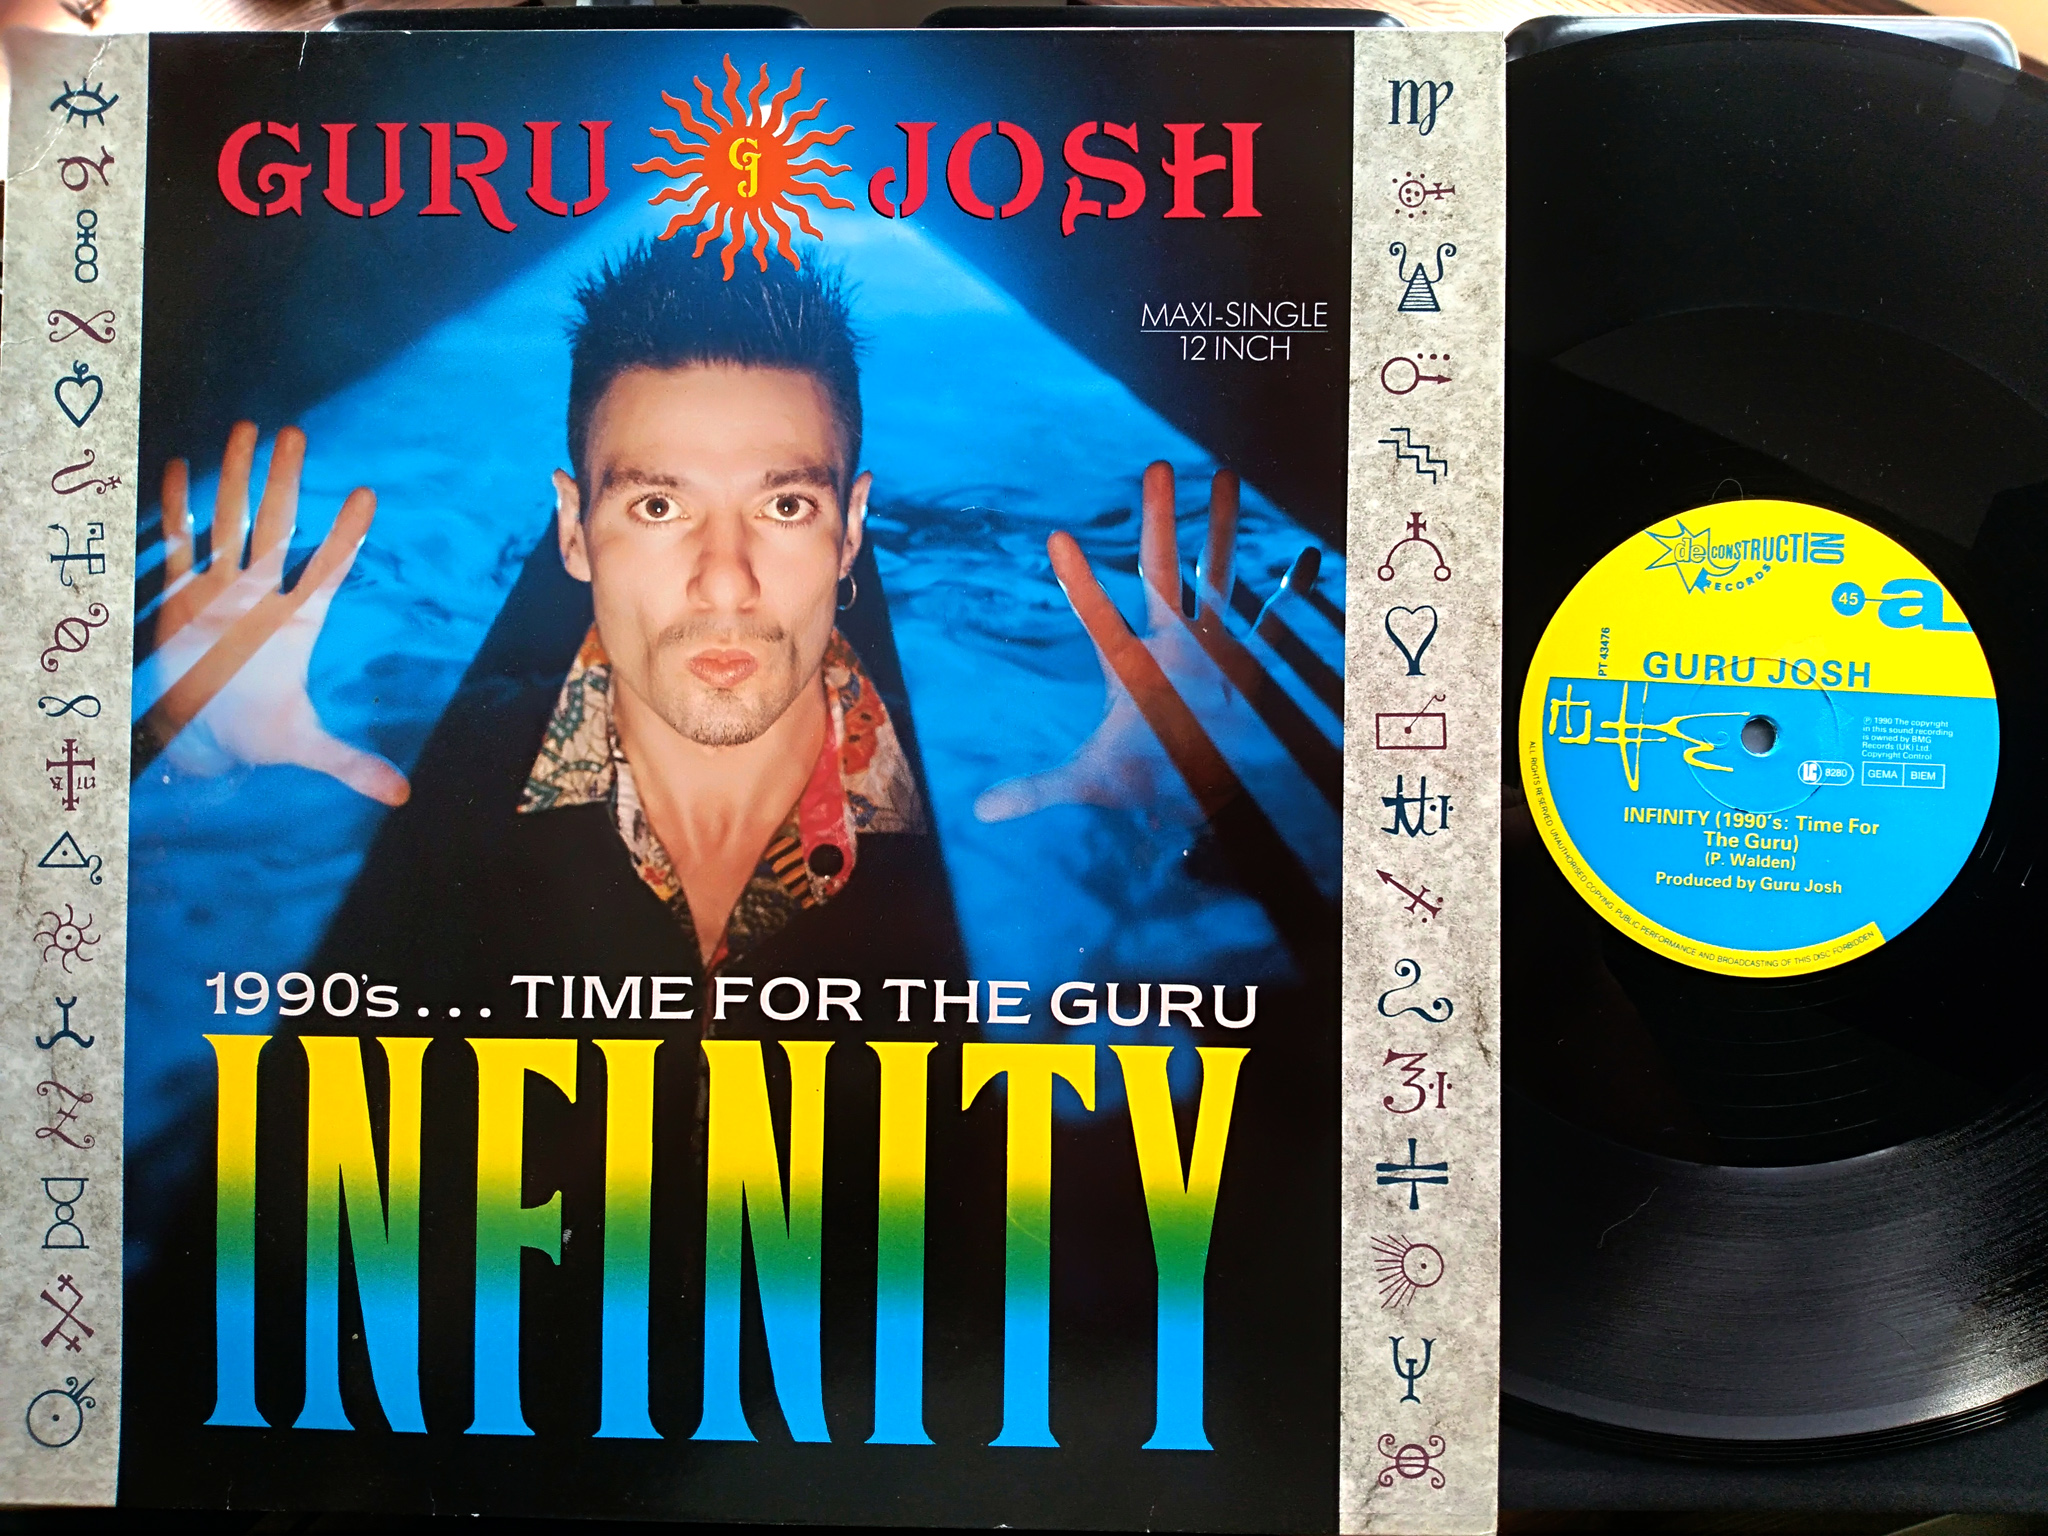 Guru Josh - Infinity (1990s Time For The Guru)